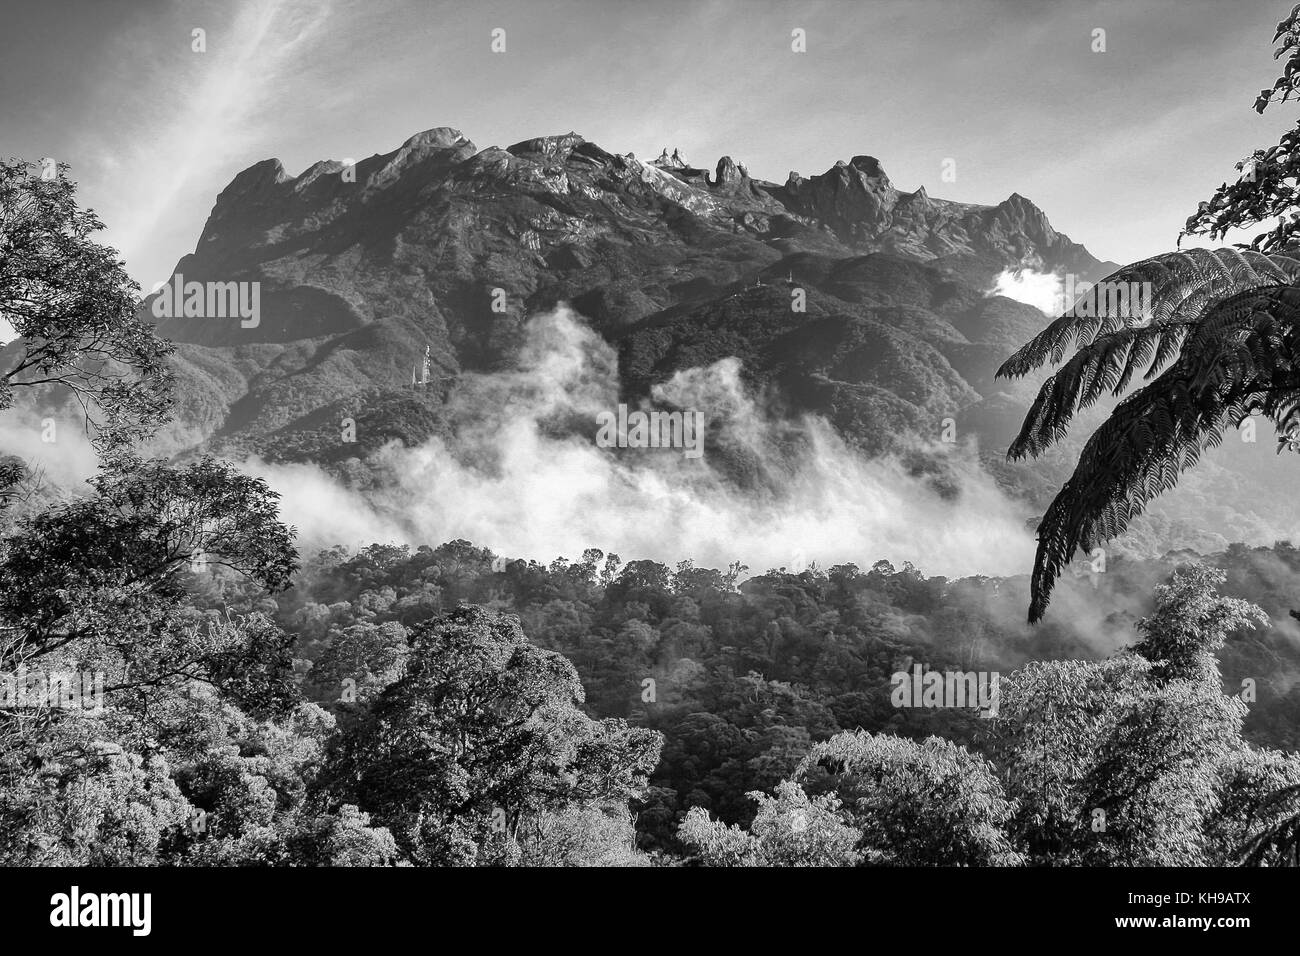 Kota Kinabalu (Mount Kinabalu), Borneo (Land Below The Wind) Stock Photo